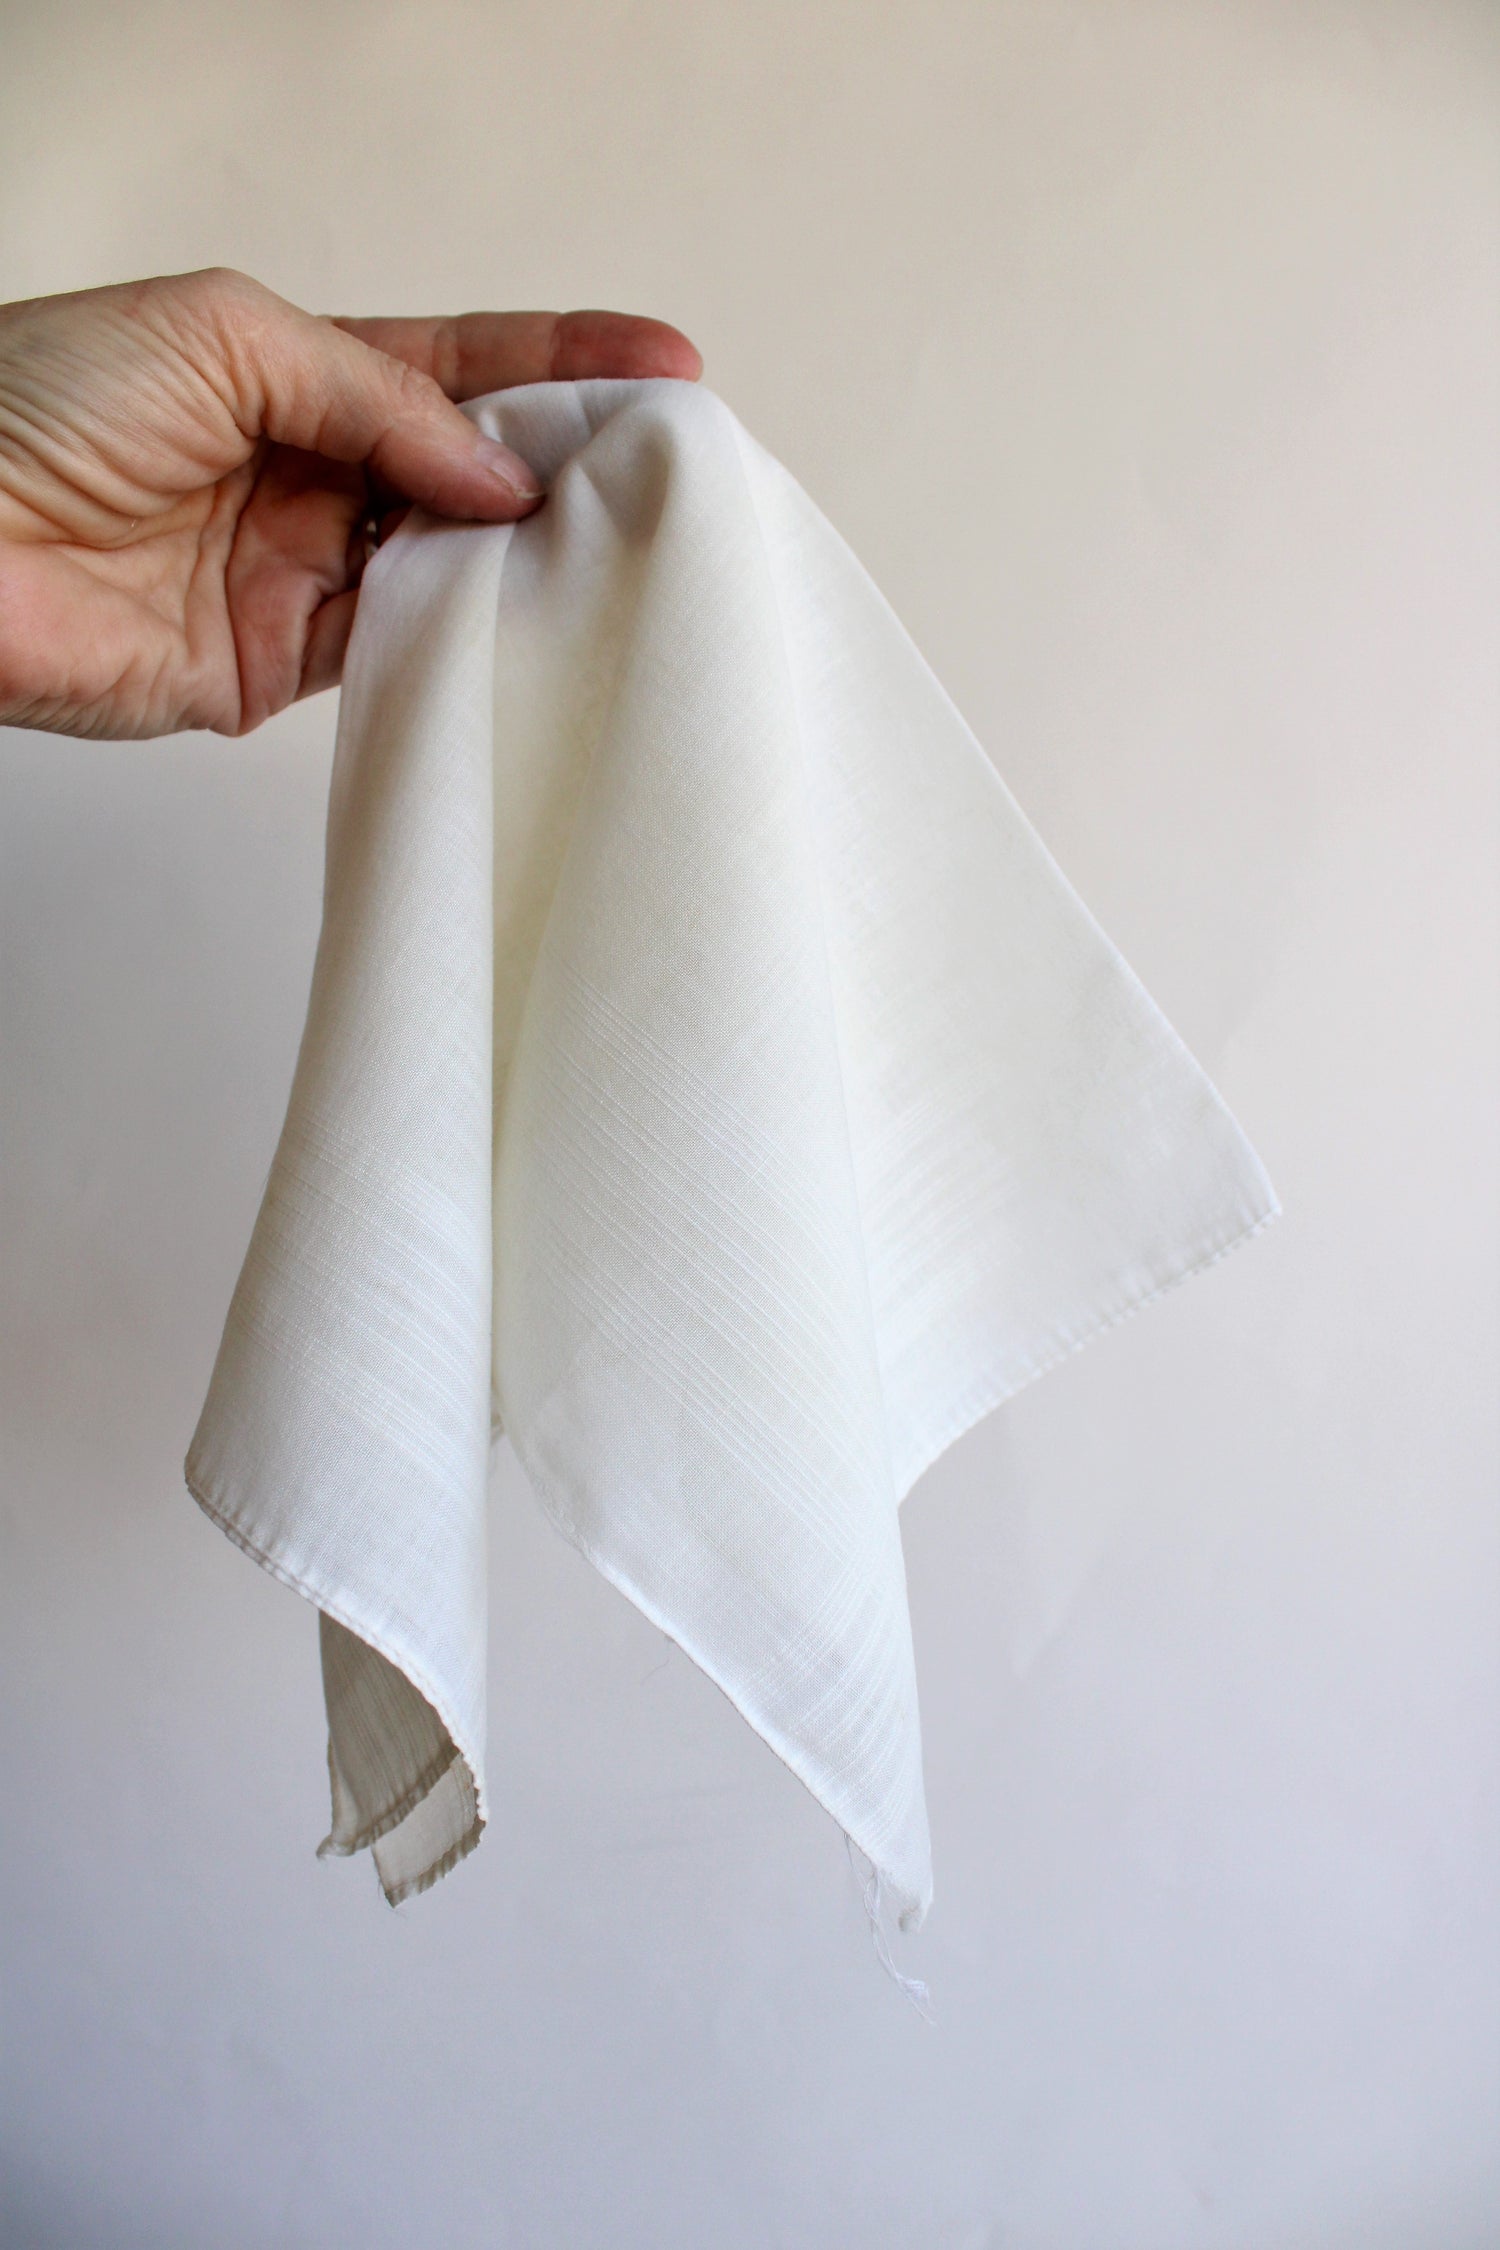 Two Vintage Men's Handkerchiefs in White Cotton